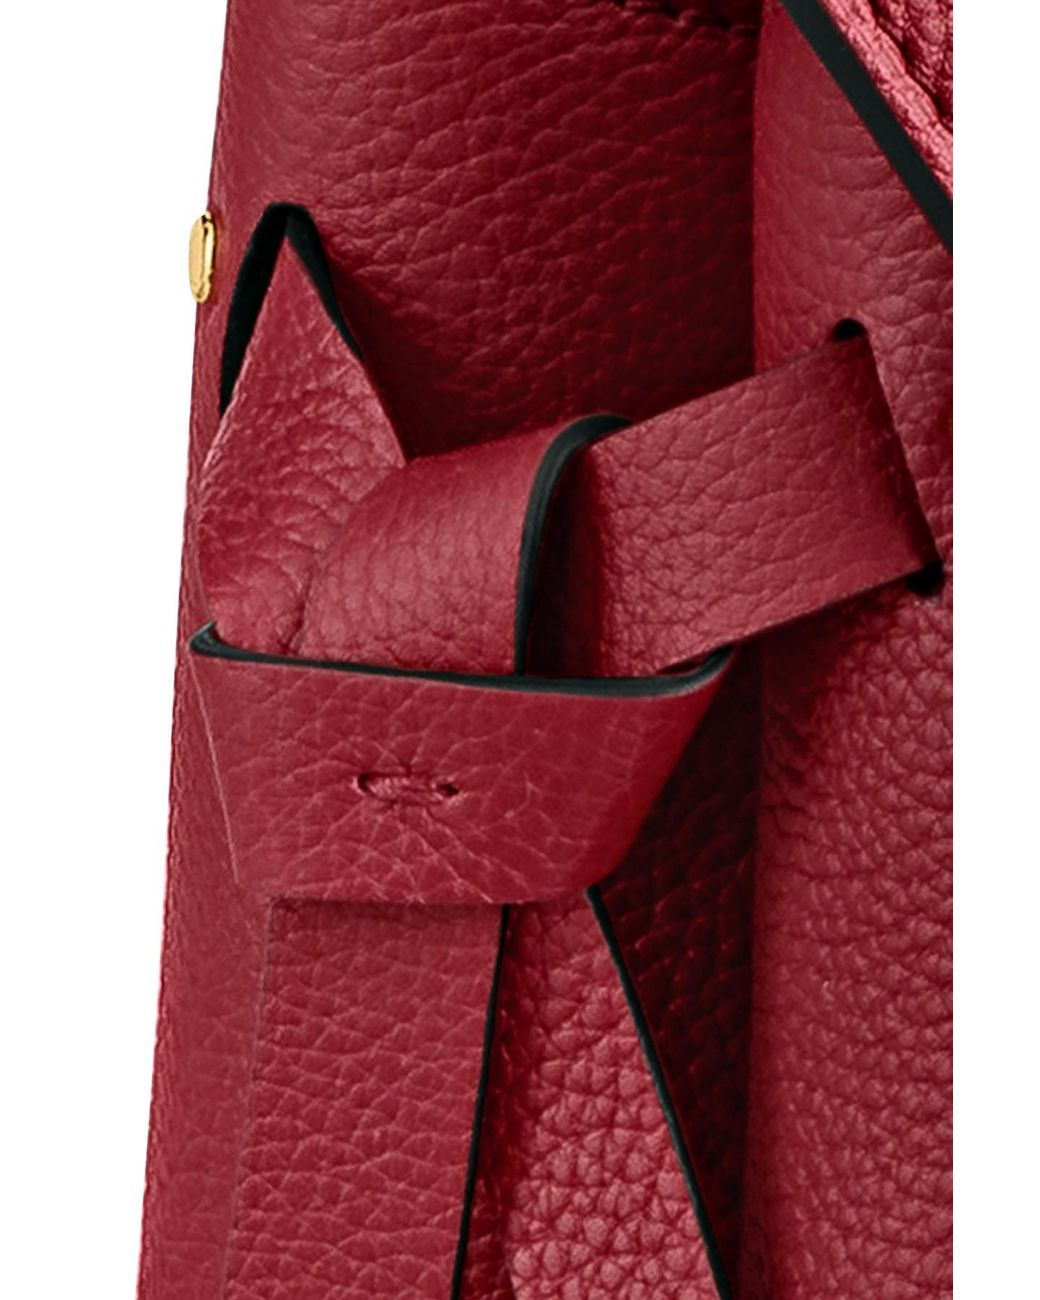 Louis Vuitton Brown Calfskin Leather Milla PM Satchel Bag Louis